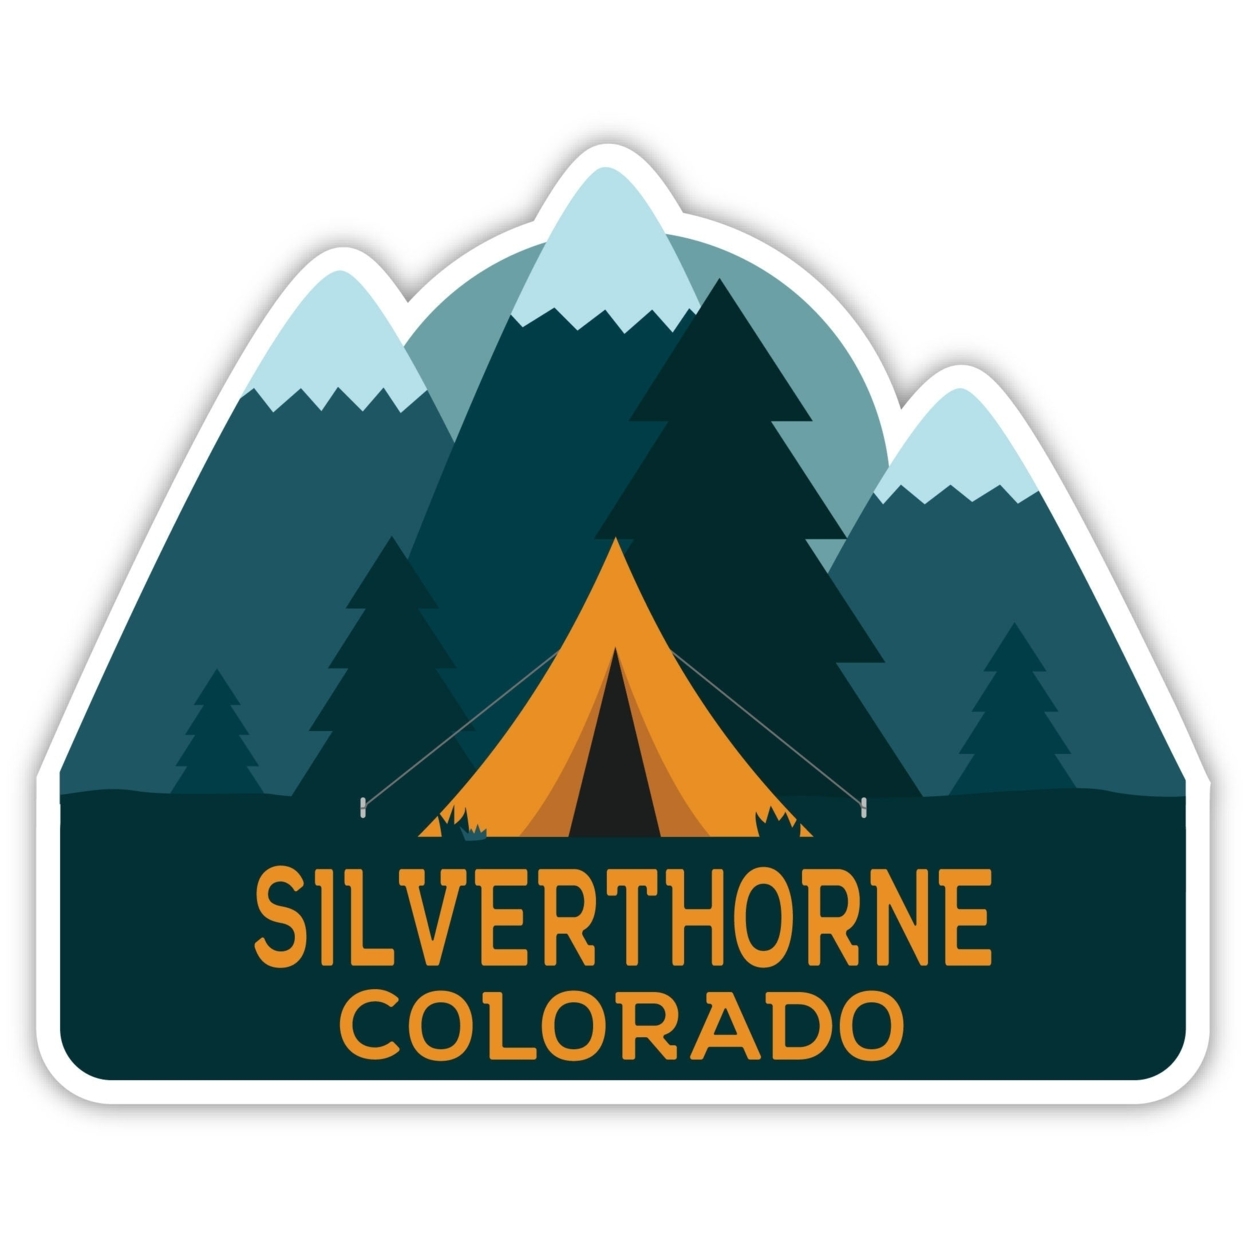 Silverthorne Colorado Souvenir Decorative Stickers (Choose Theme And Size) - Single Unit, 2-Inch, Camp Life